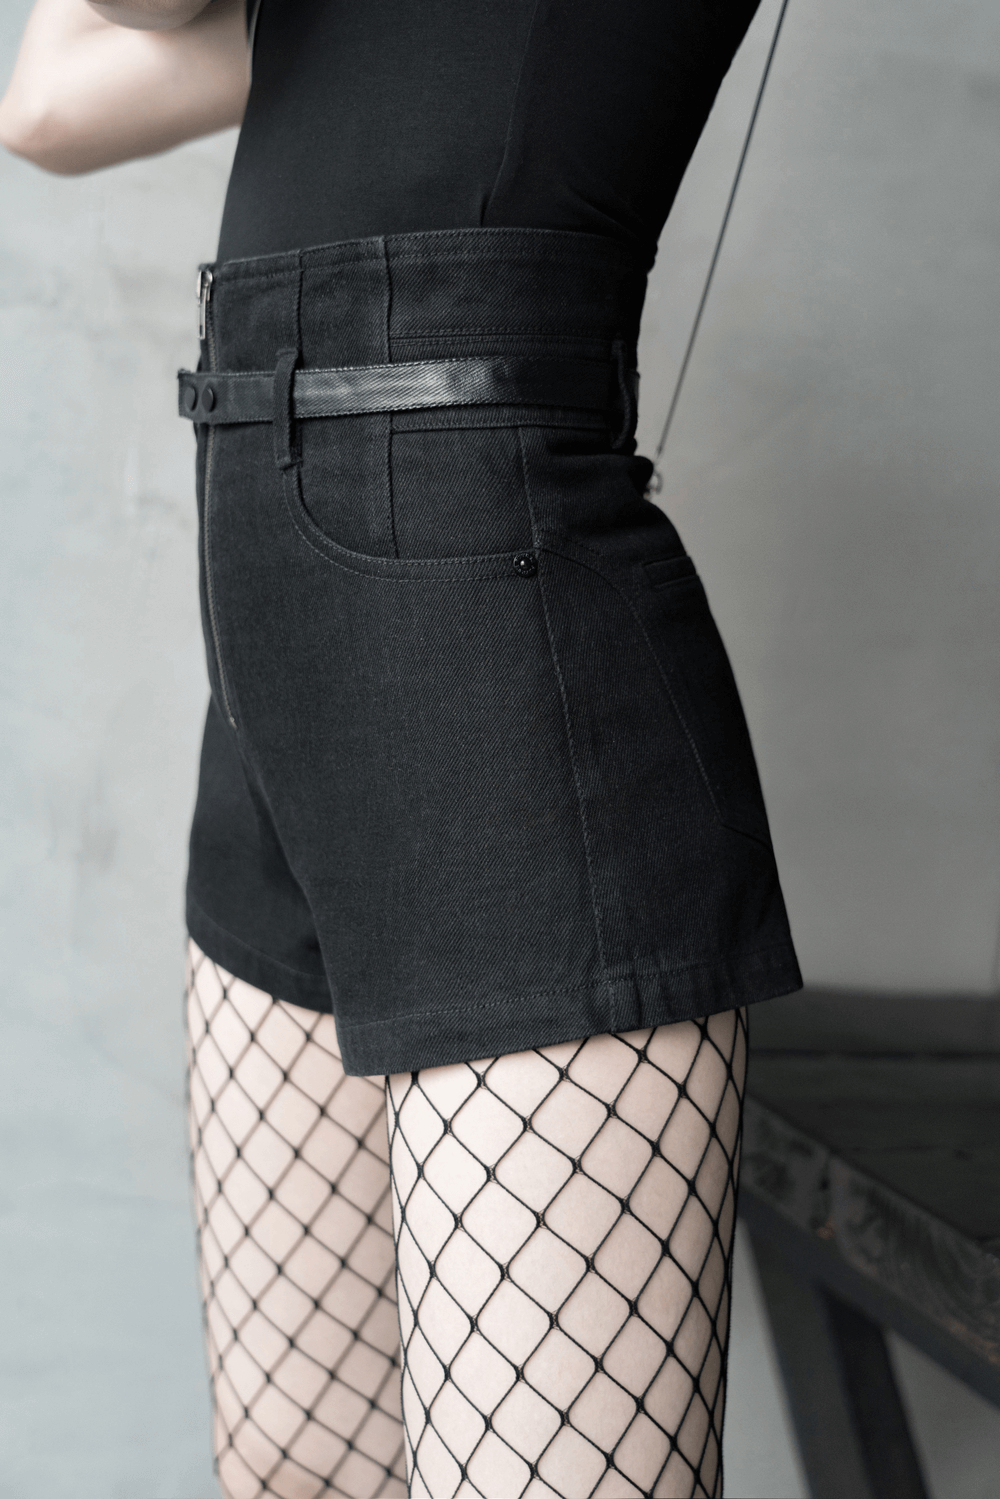 Gothic High Waist Zip Shorts with Detachable Belt